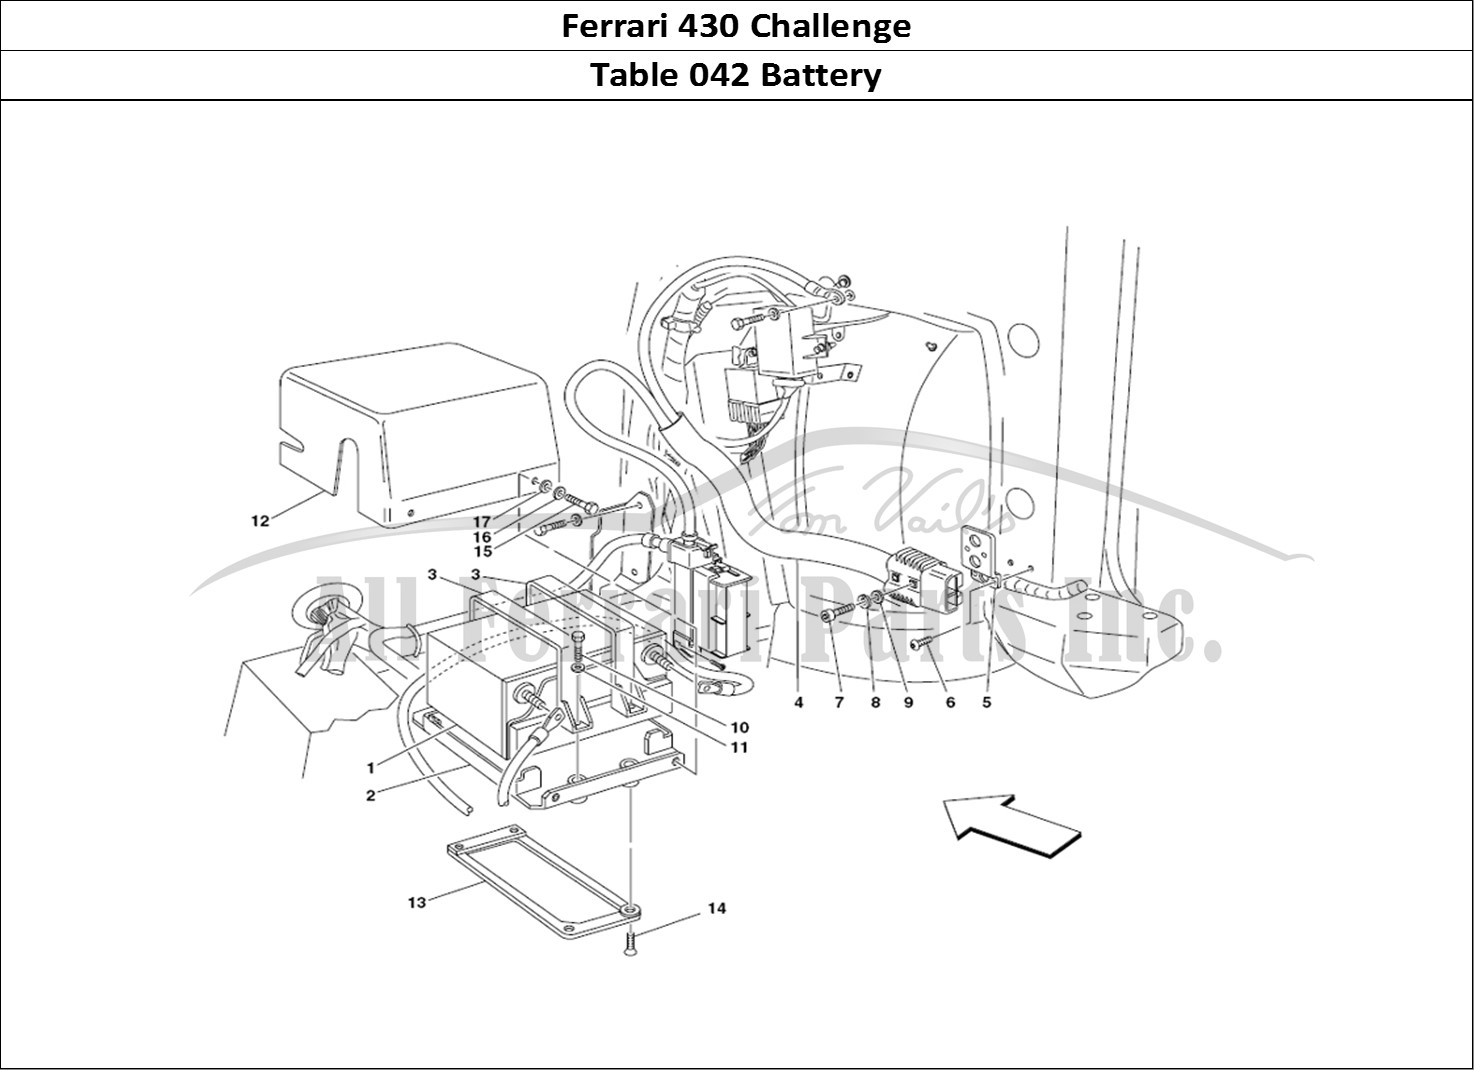 Ferrari Parts Ferrari 430 Challenge (2006) Page 042 Battery